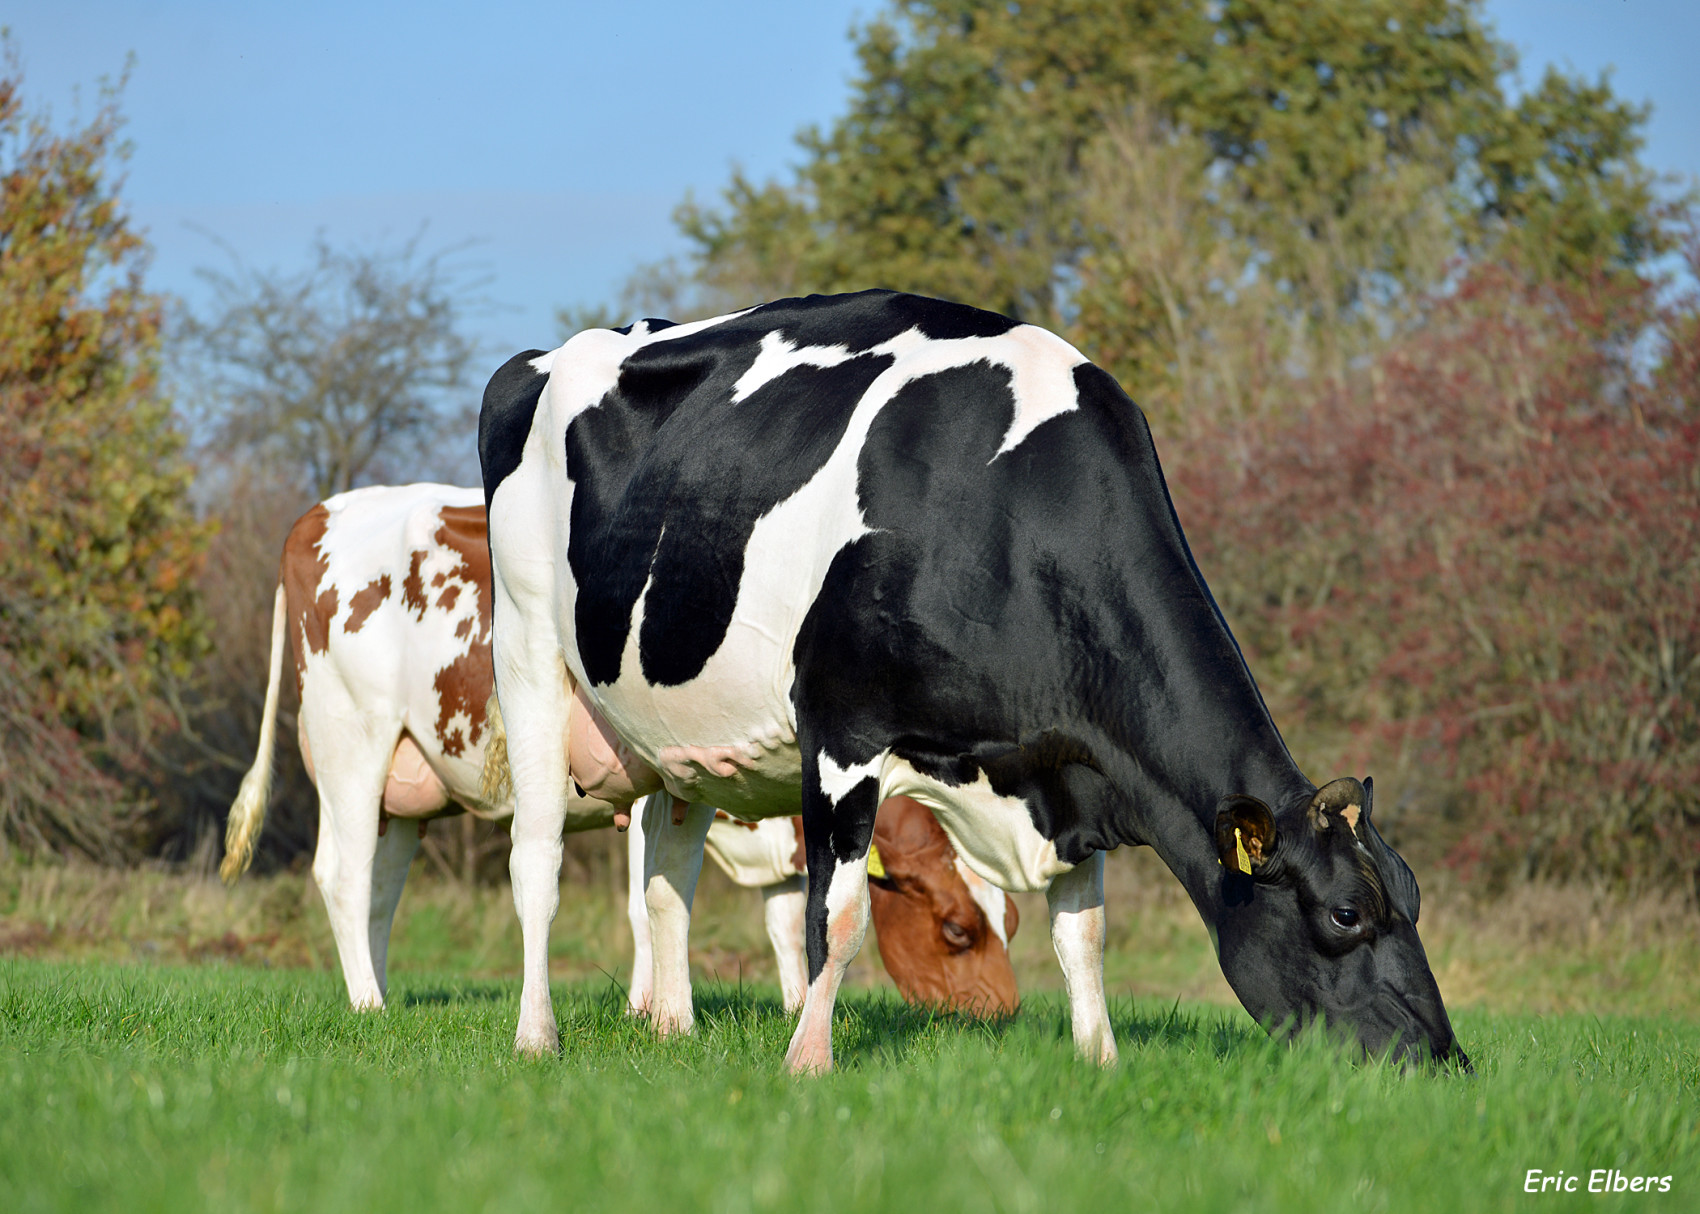 Lifetime production of Dutch cows rises to 37,401 kg of milk